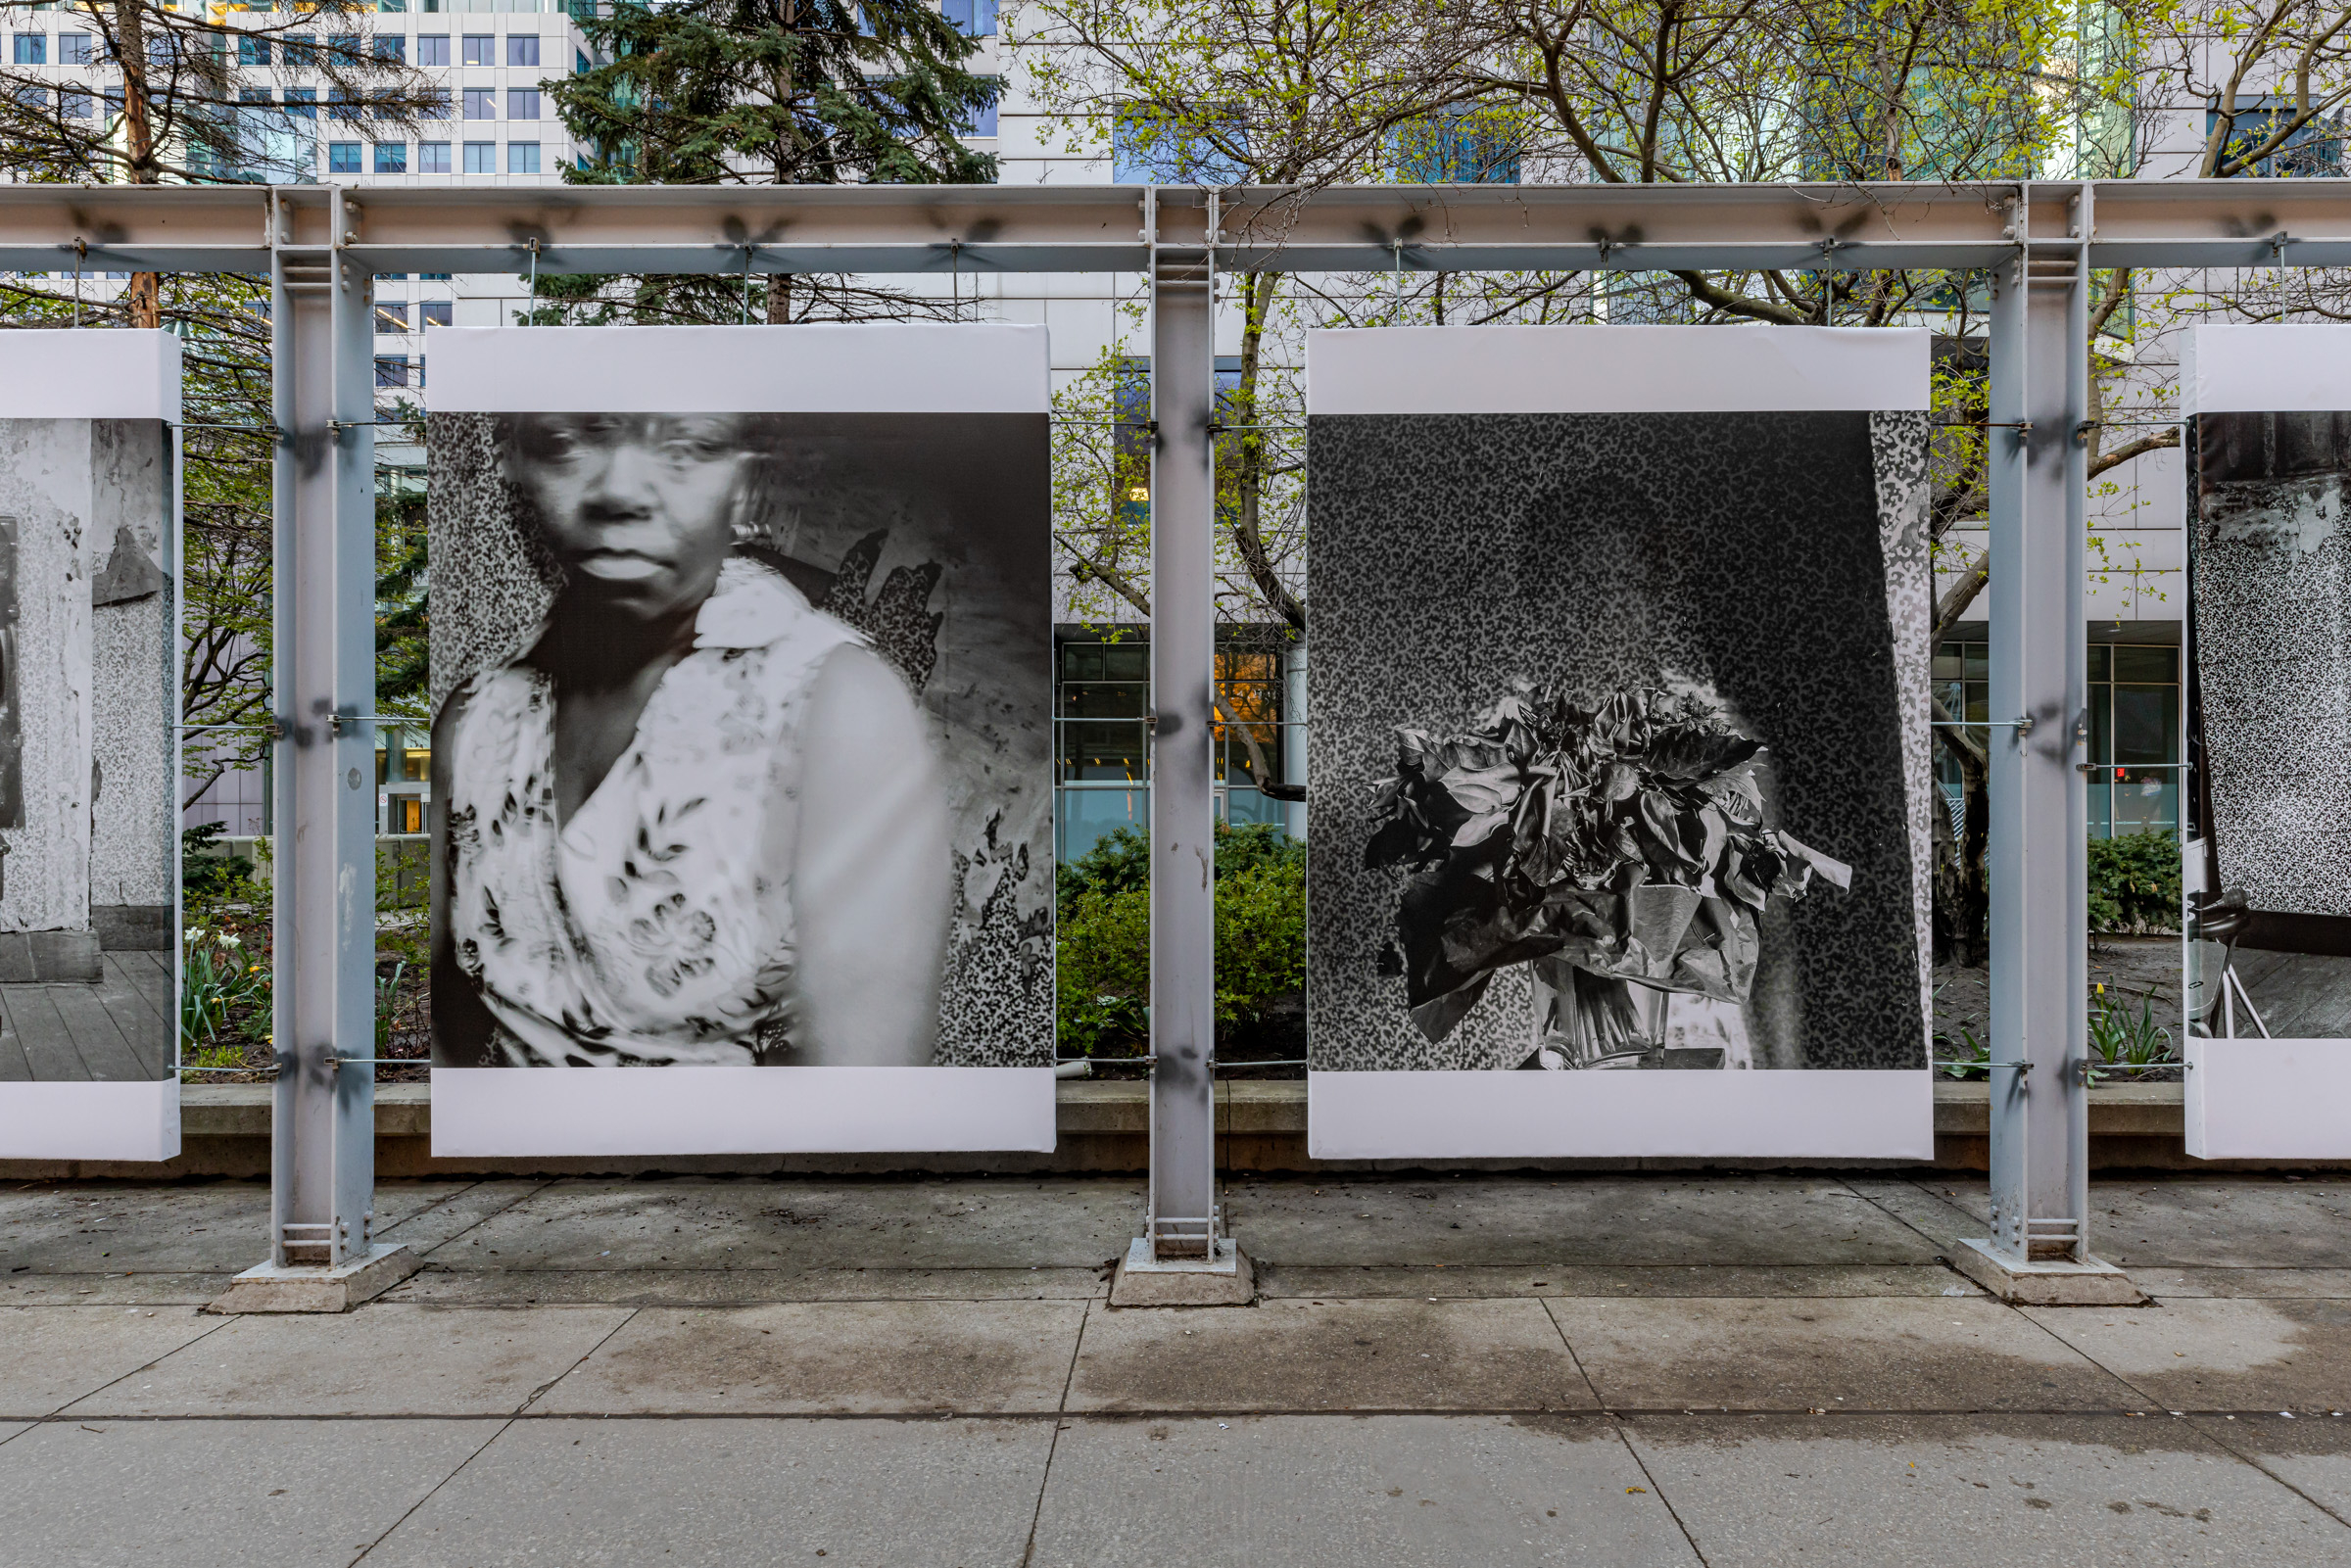     Hélène Amouzou, Writing Without Words: The Autoportraits of Hélène Amouzou, installation view, Metro Hall along King St W, Toronto, 2023. Courtesy of the artist and CONTACT. Photo: Toni Hafkenscheid

